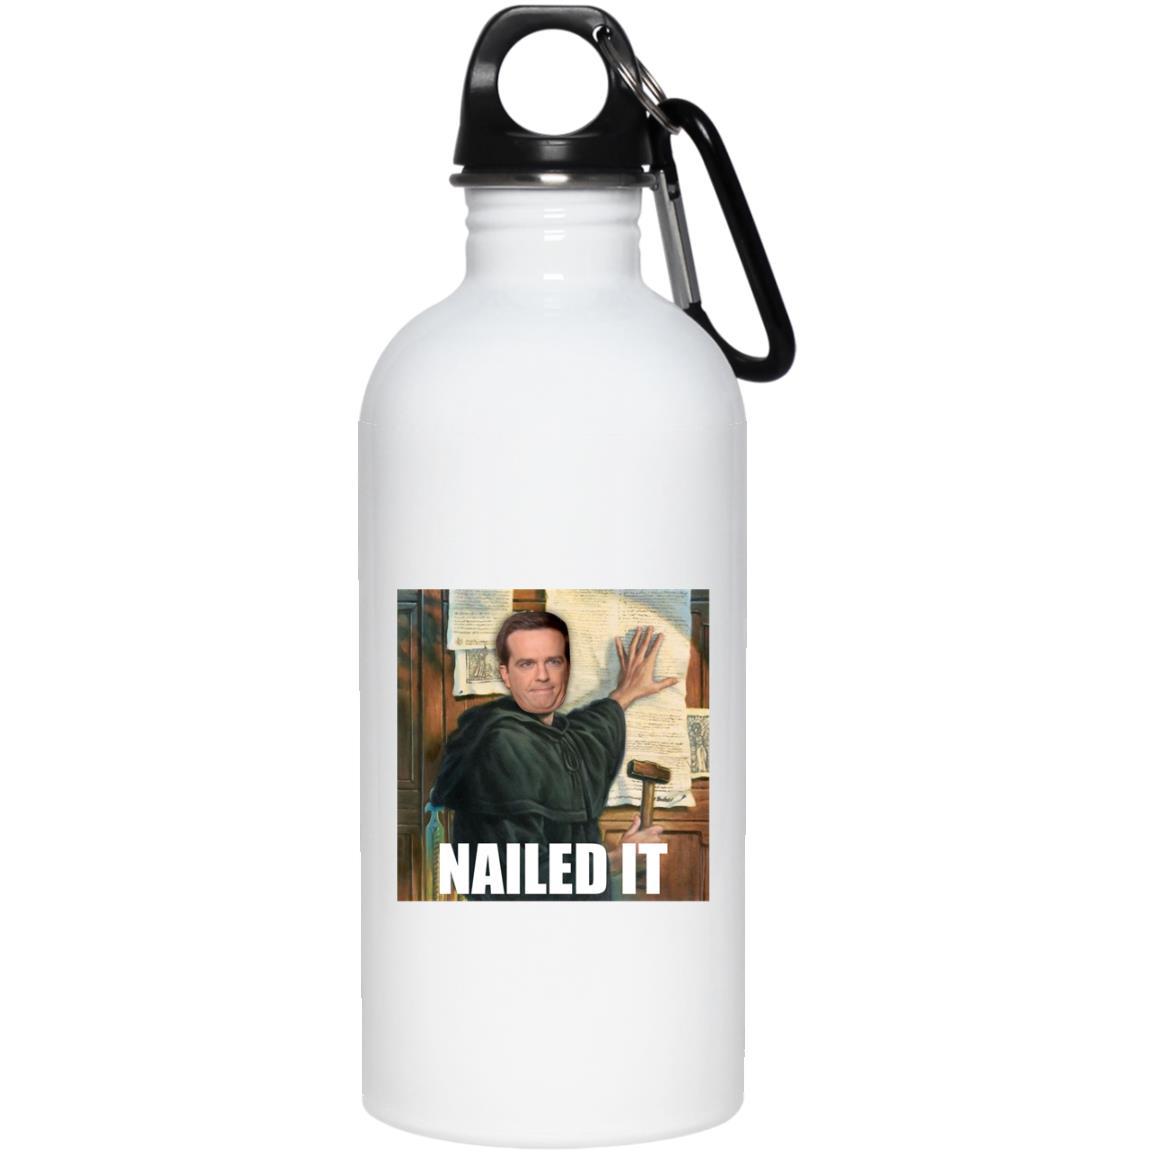 Nailed It (20oz Steel Water Bottle) - SDG Clothing